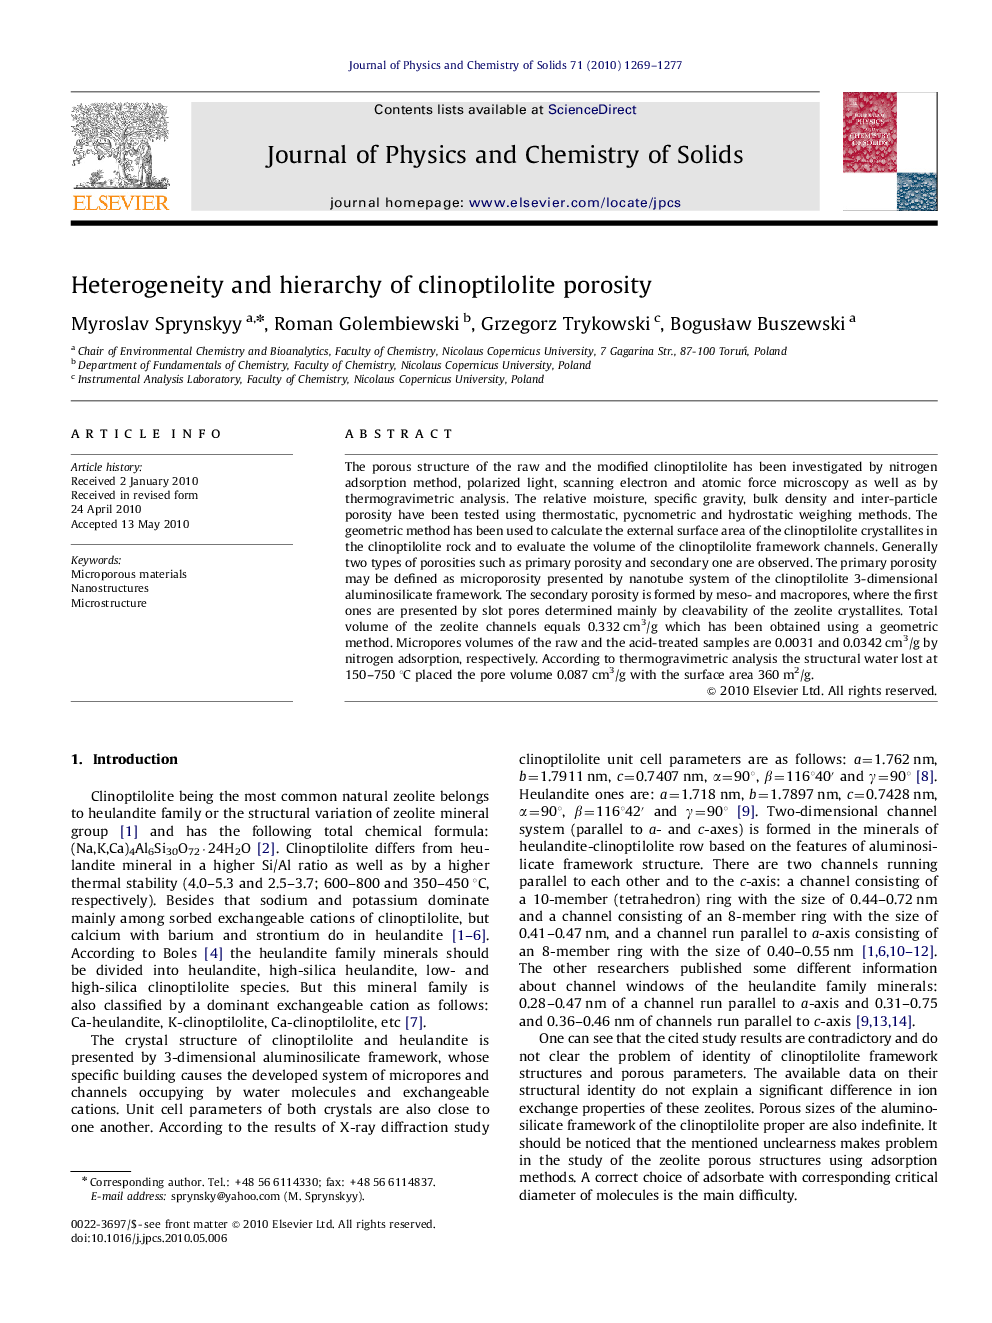 Heterogeneity and hierarchy of clinoptilolite porosity